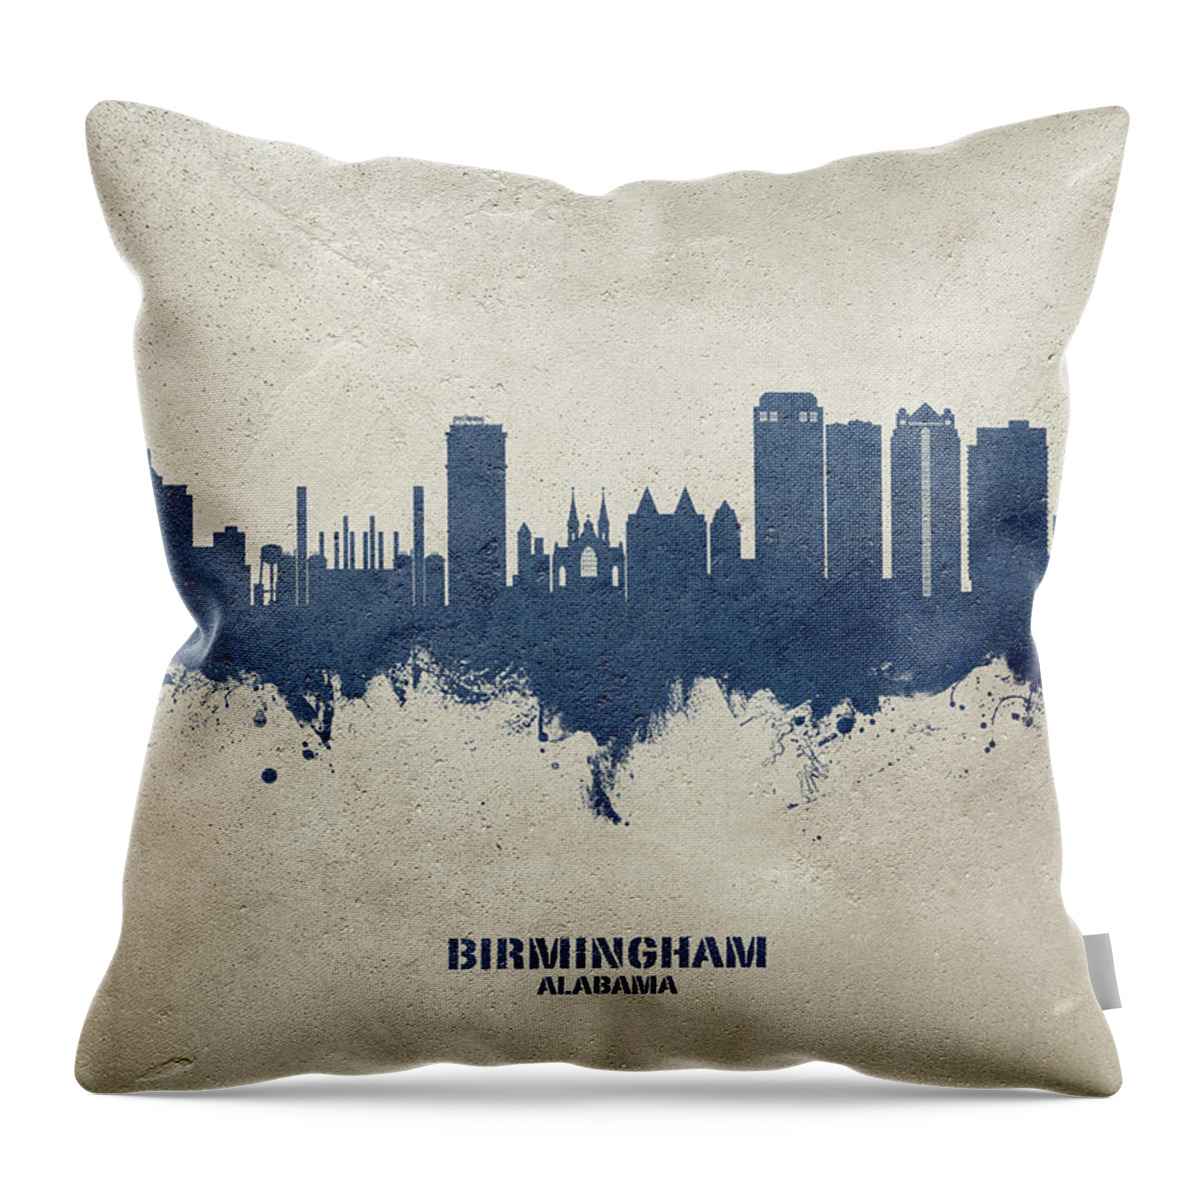 Birmingham Throw Pillow featuring the digital art Birmingham Alabama Skyline by Michael Tompsett